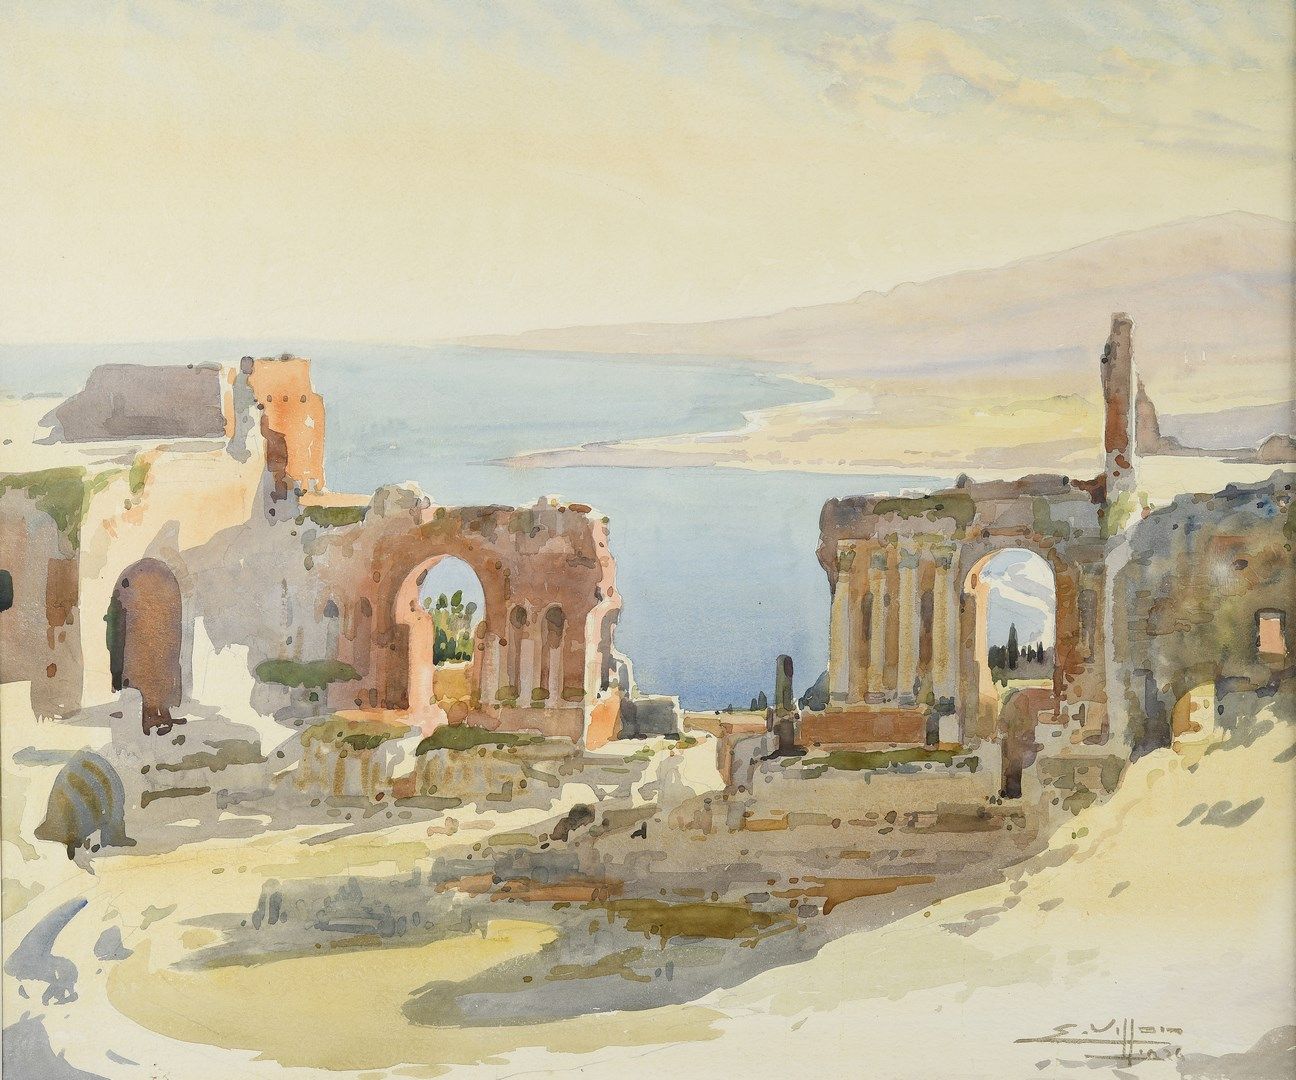 Null VILLON Eugène, 1879-1951

Ruinen von Taormina, Sizilien, 1926

Aquarell und&hellip;